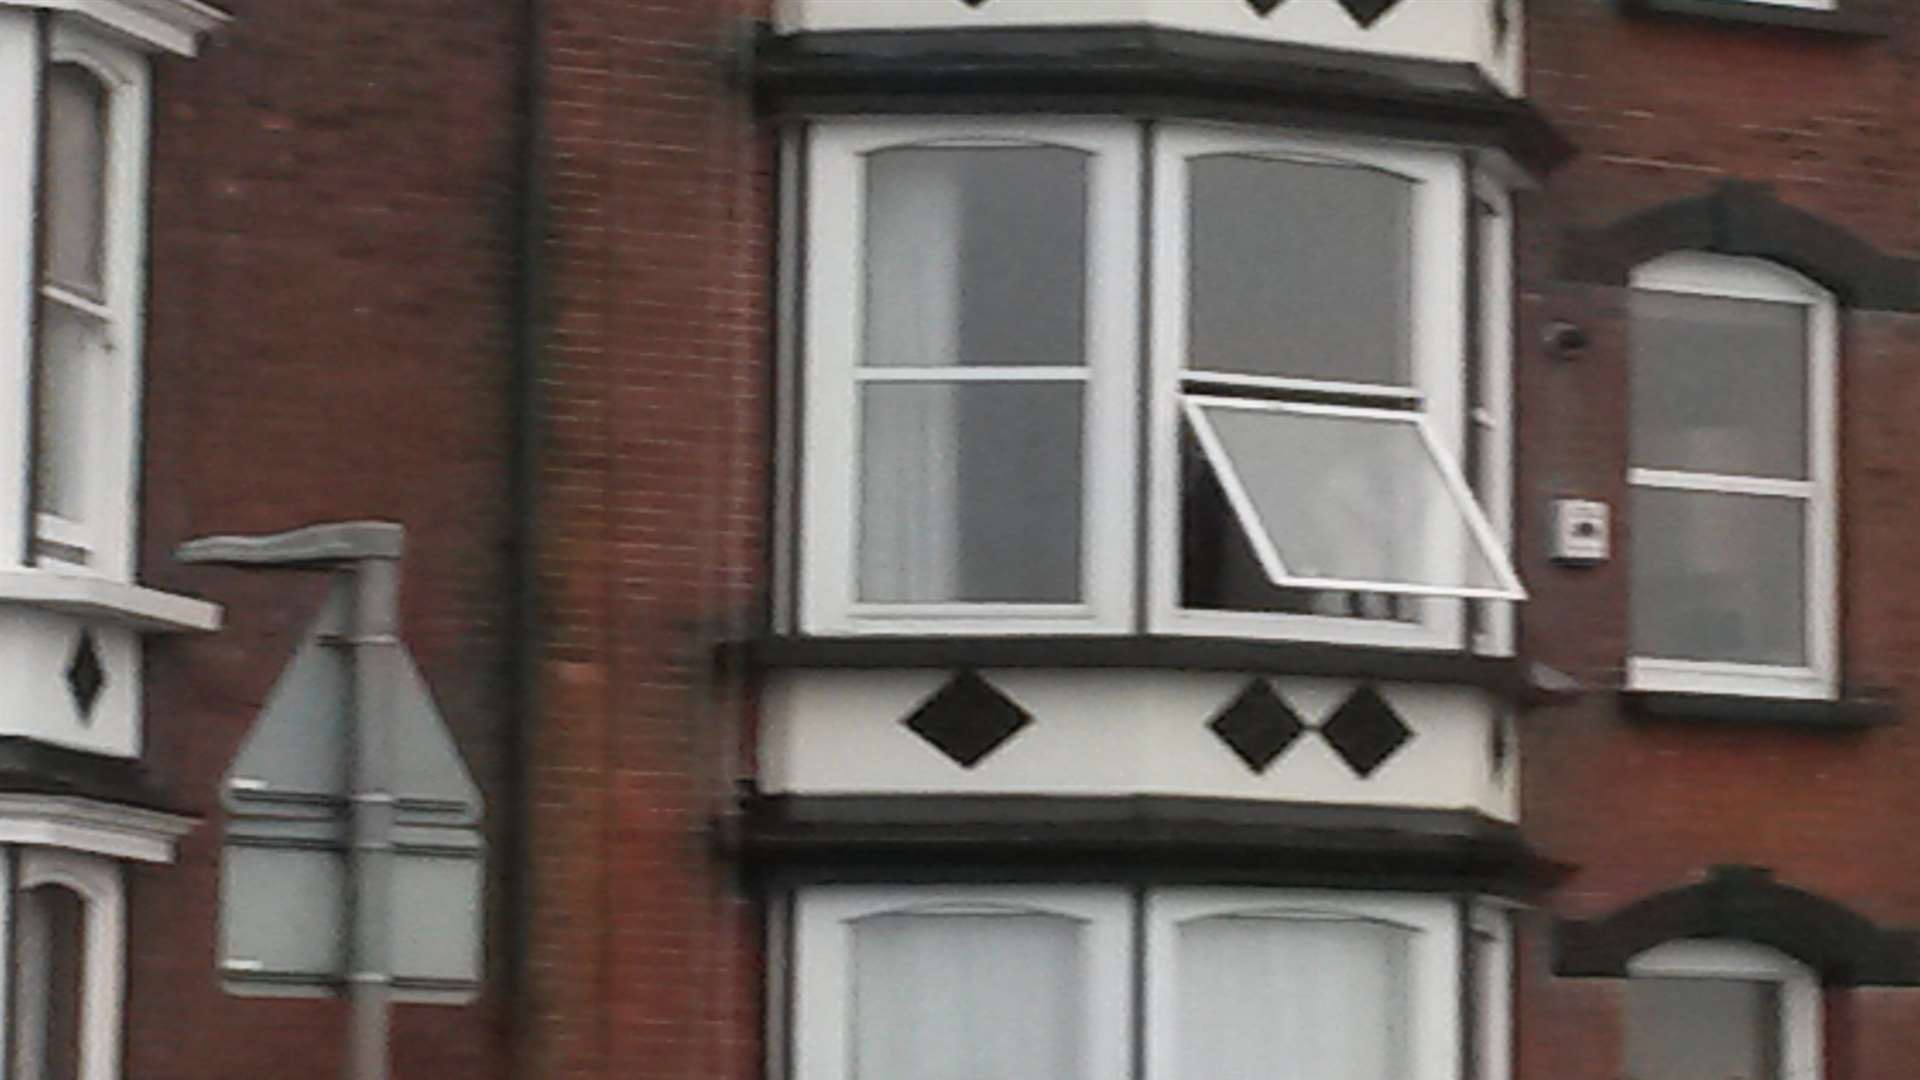 A man has been seen brandishing a knife from a first floor window